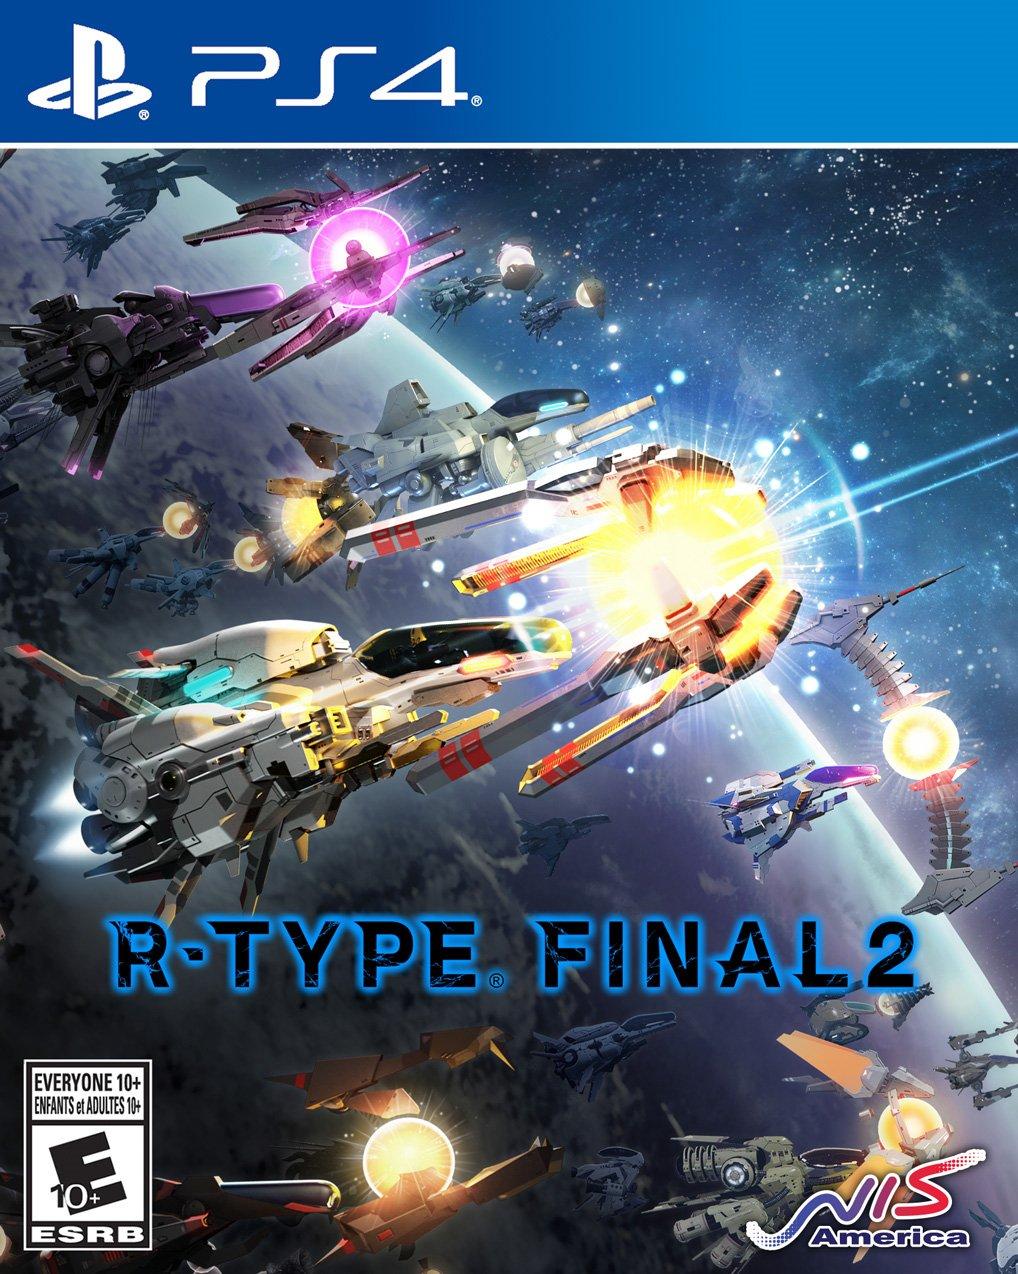 R-Type Final 2 | Koei Tecmo | GameStop